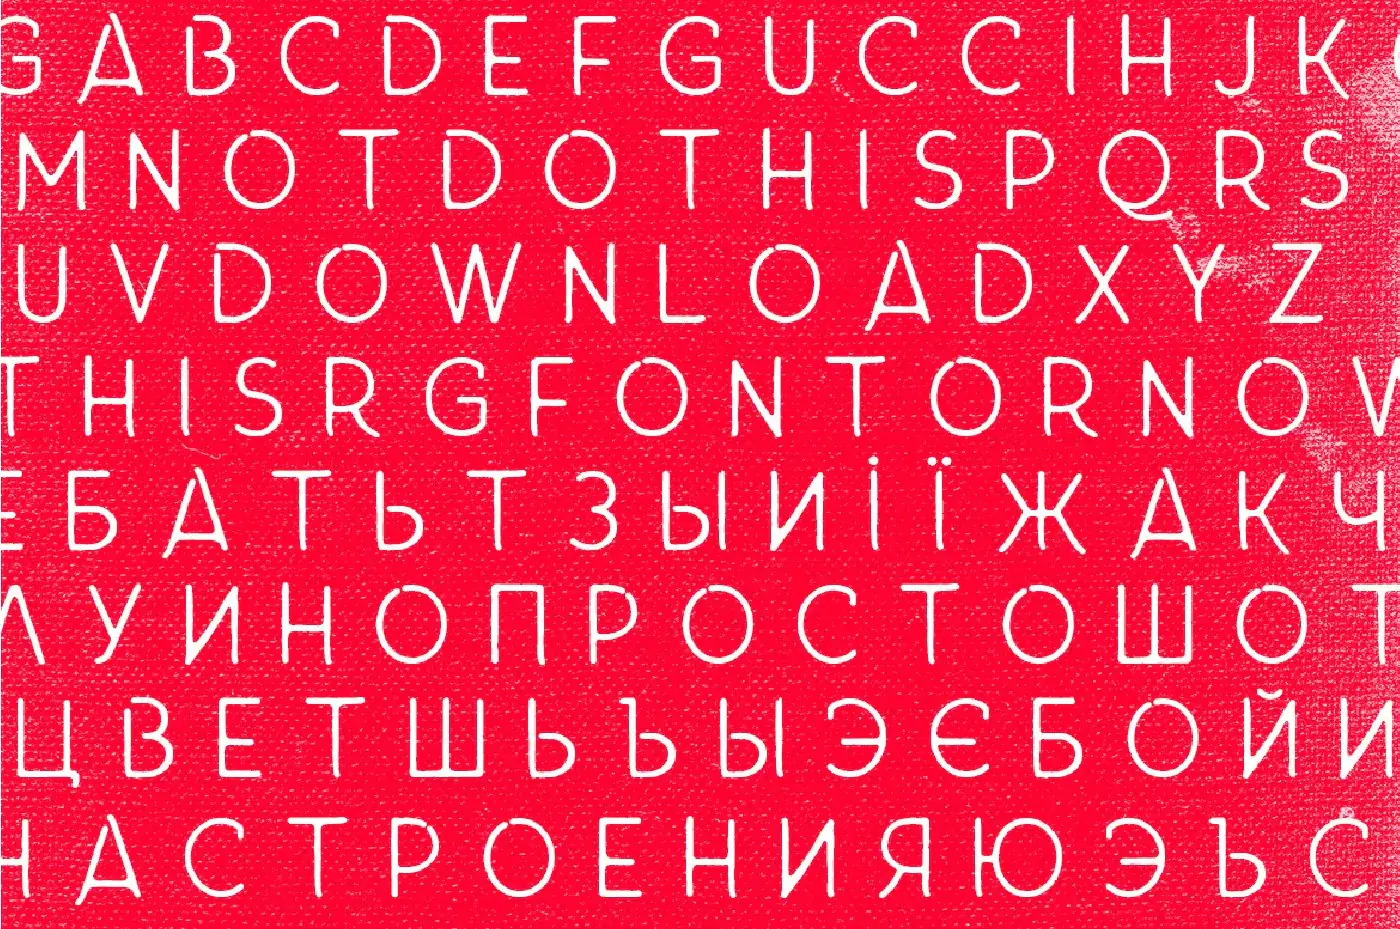 Шрифт UNTTLD Basic Cyrillic